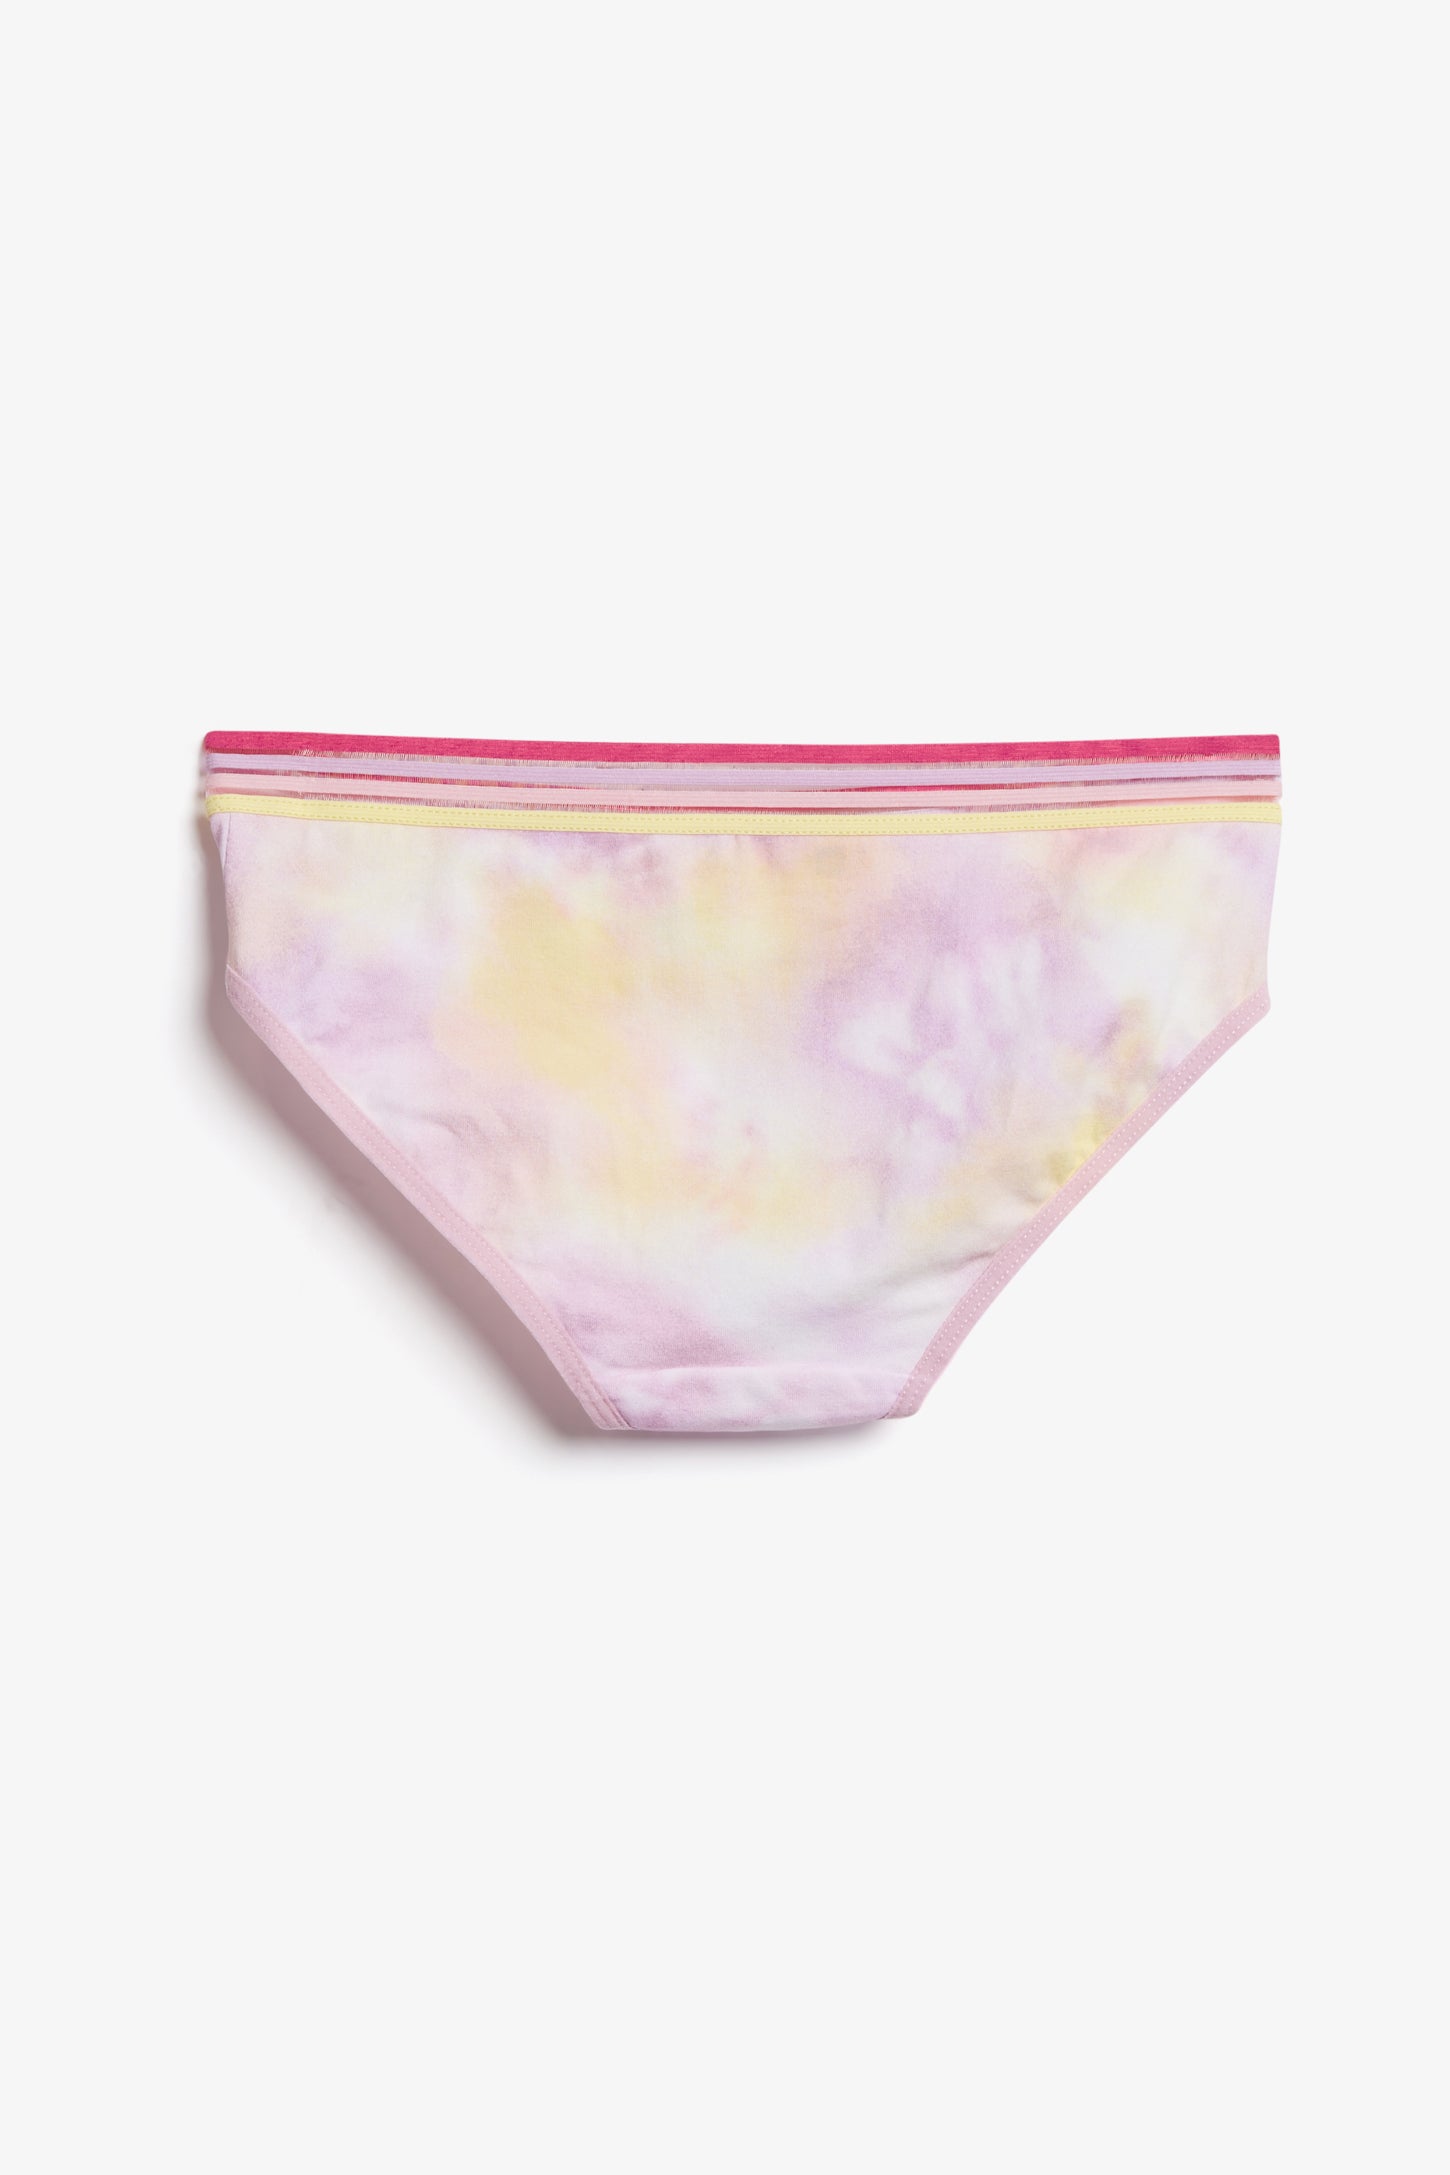 Culotte bikini arc-en-ciel, 3/15$ - Ado fille && BLANC/ROSE